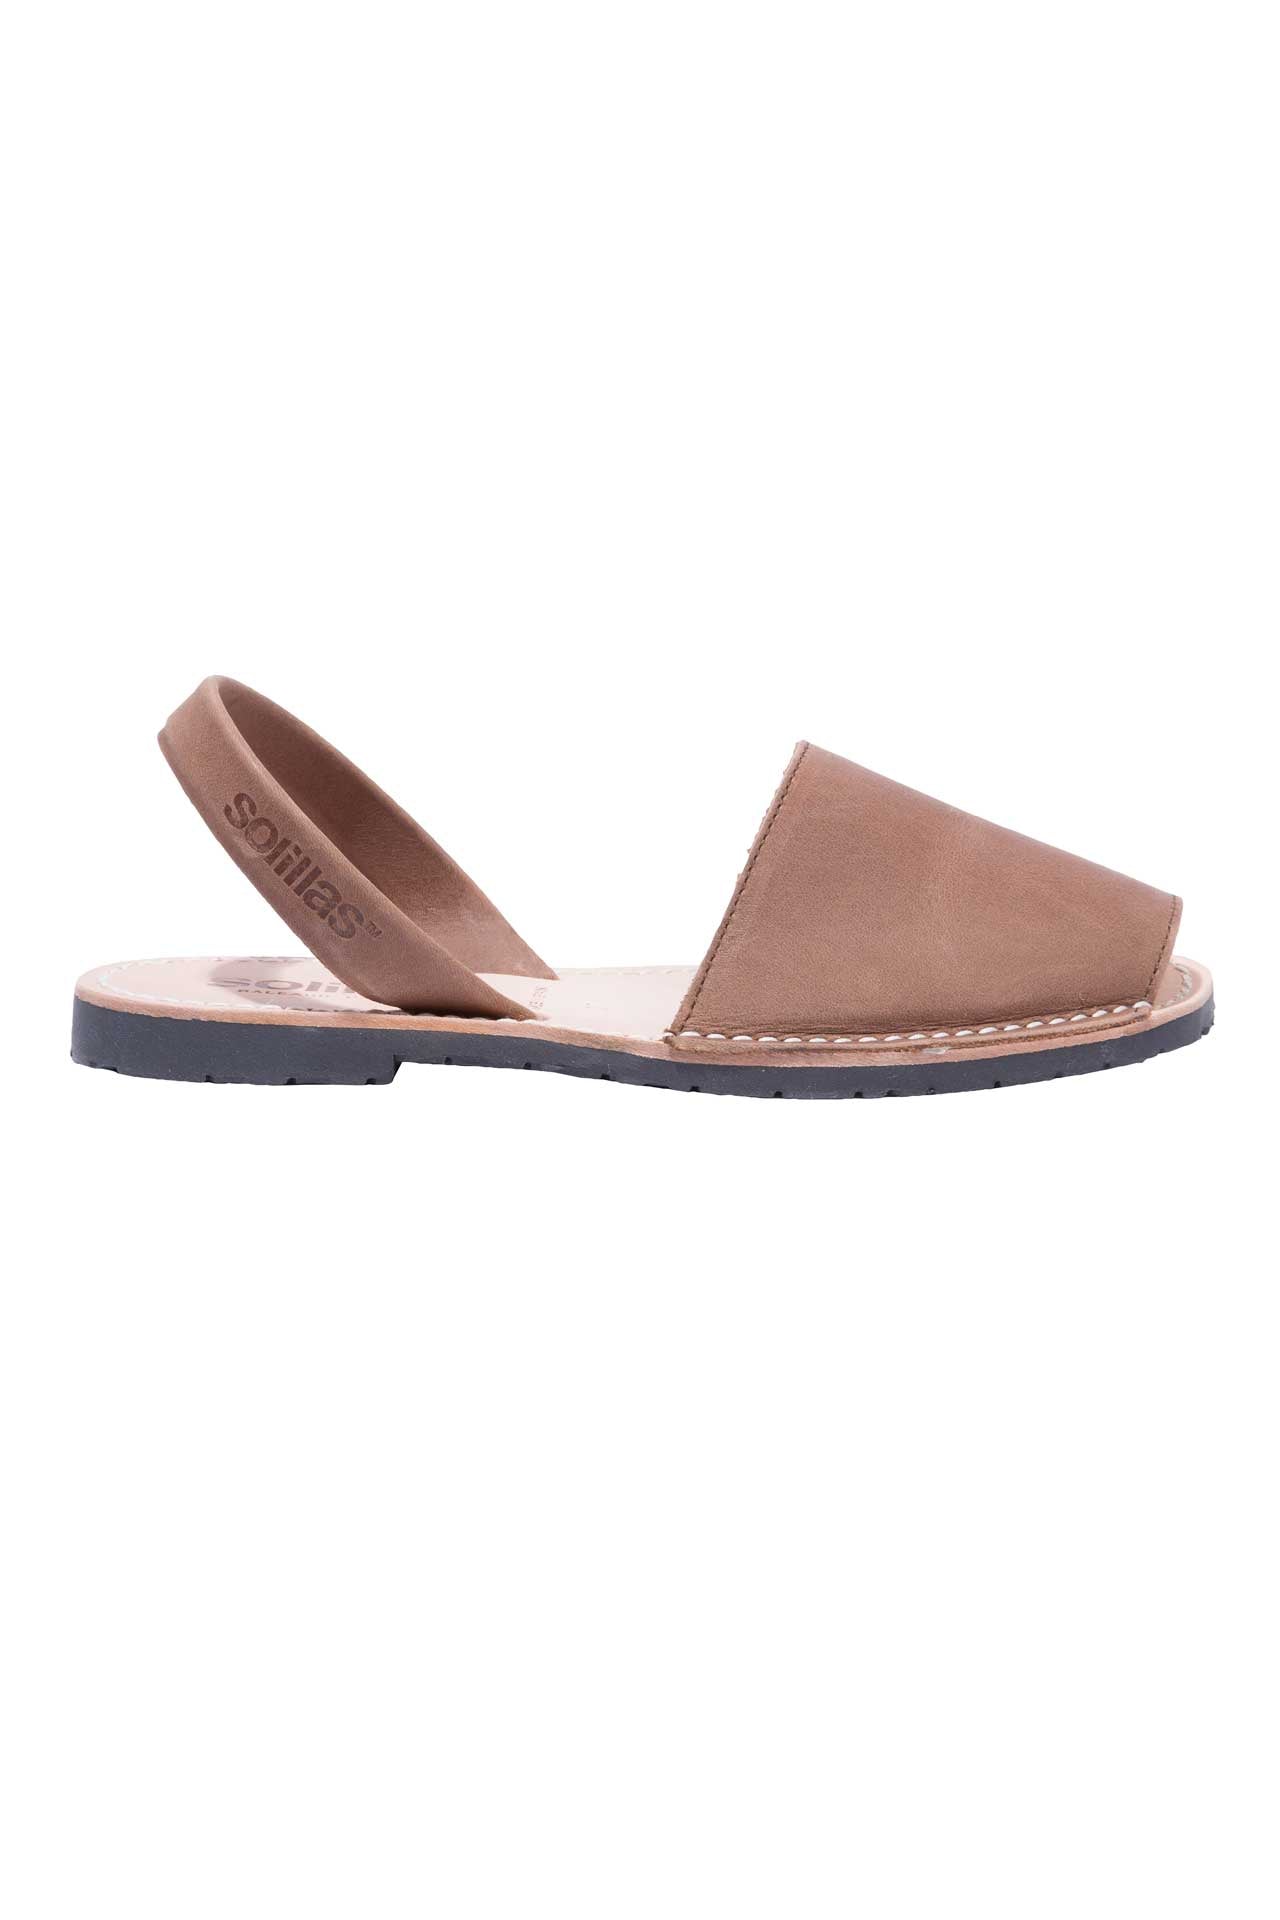 Menorcan Sandals | Original Brown Leather | Solillas - solillas